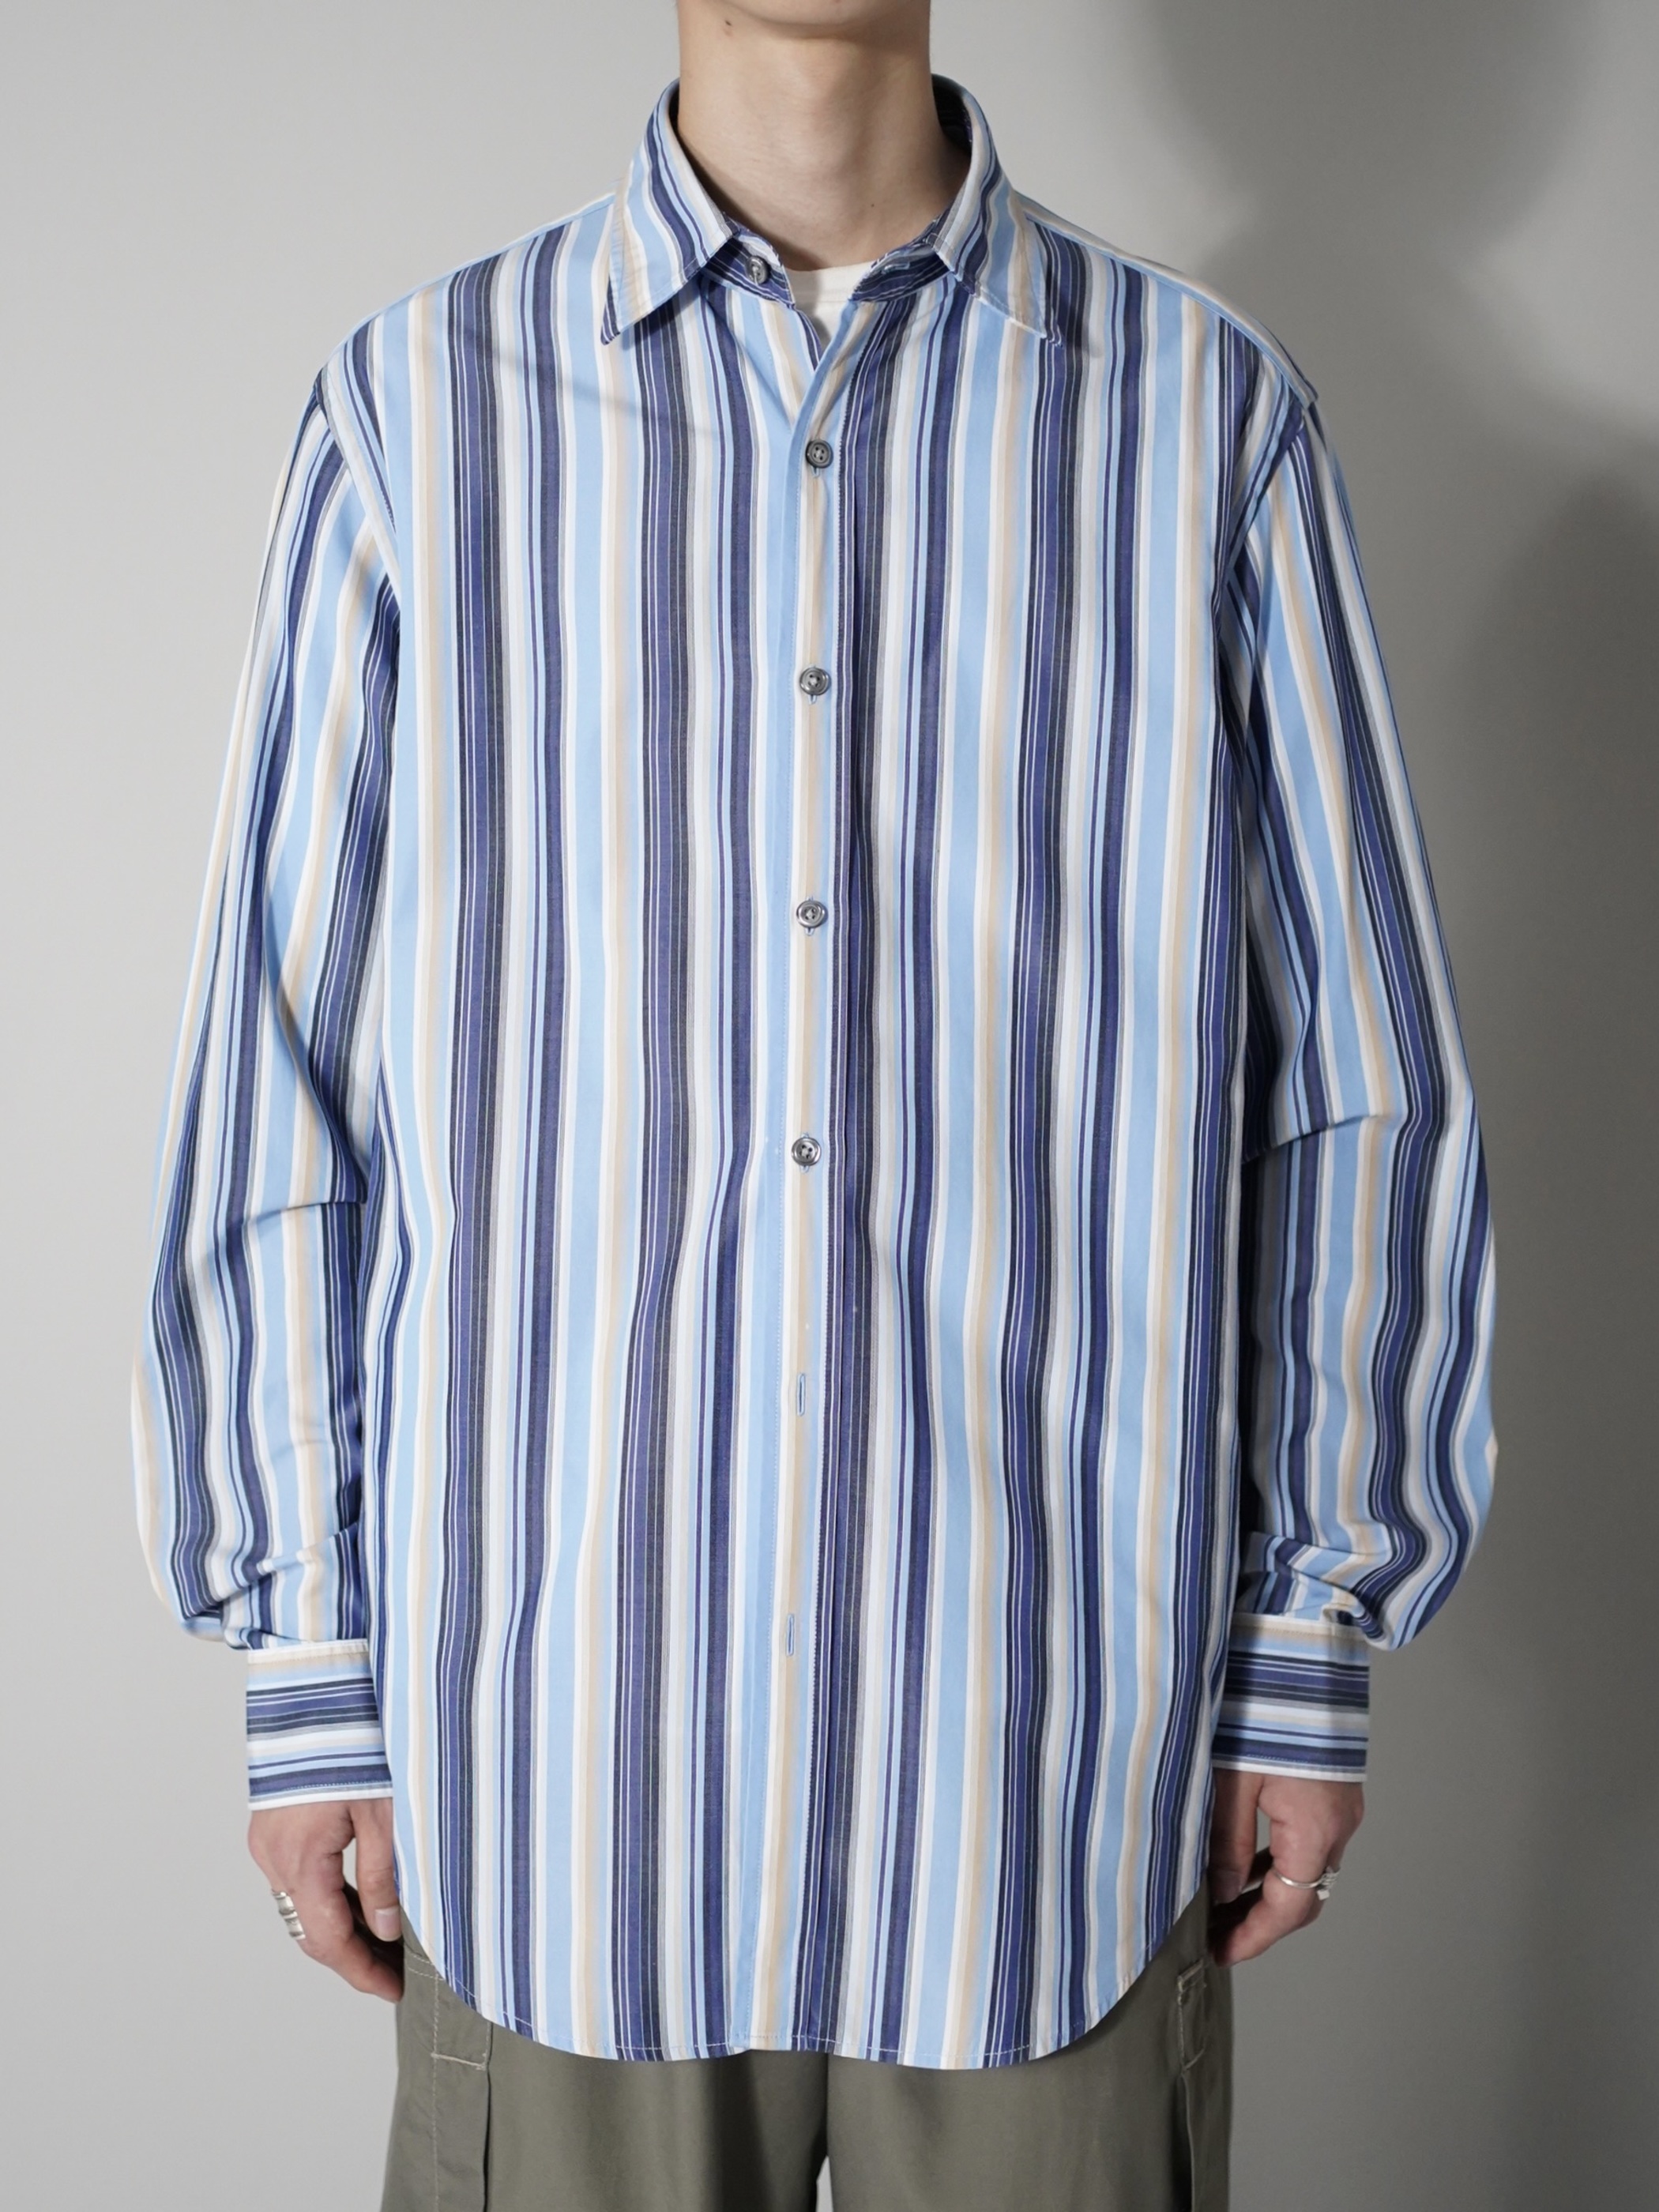 DKNY mulch stripe Cotton Dress shirts